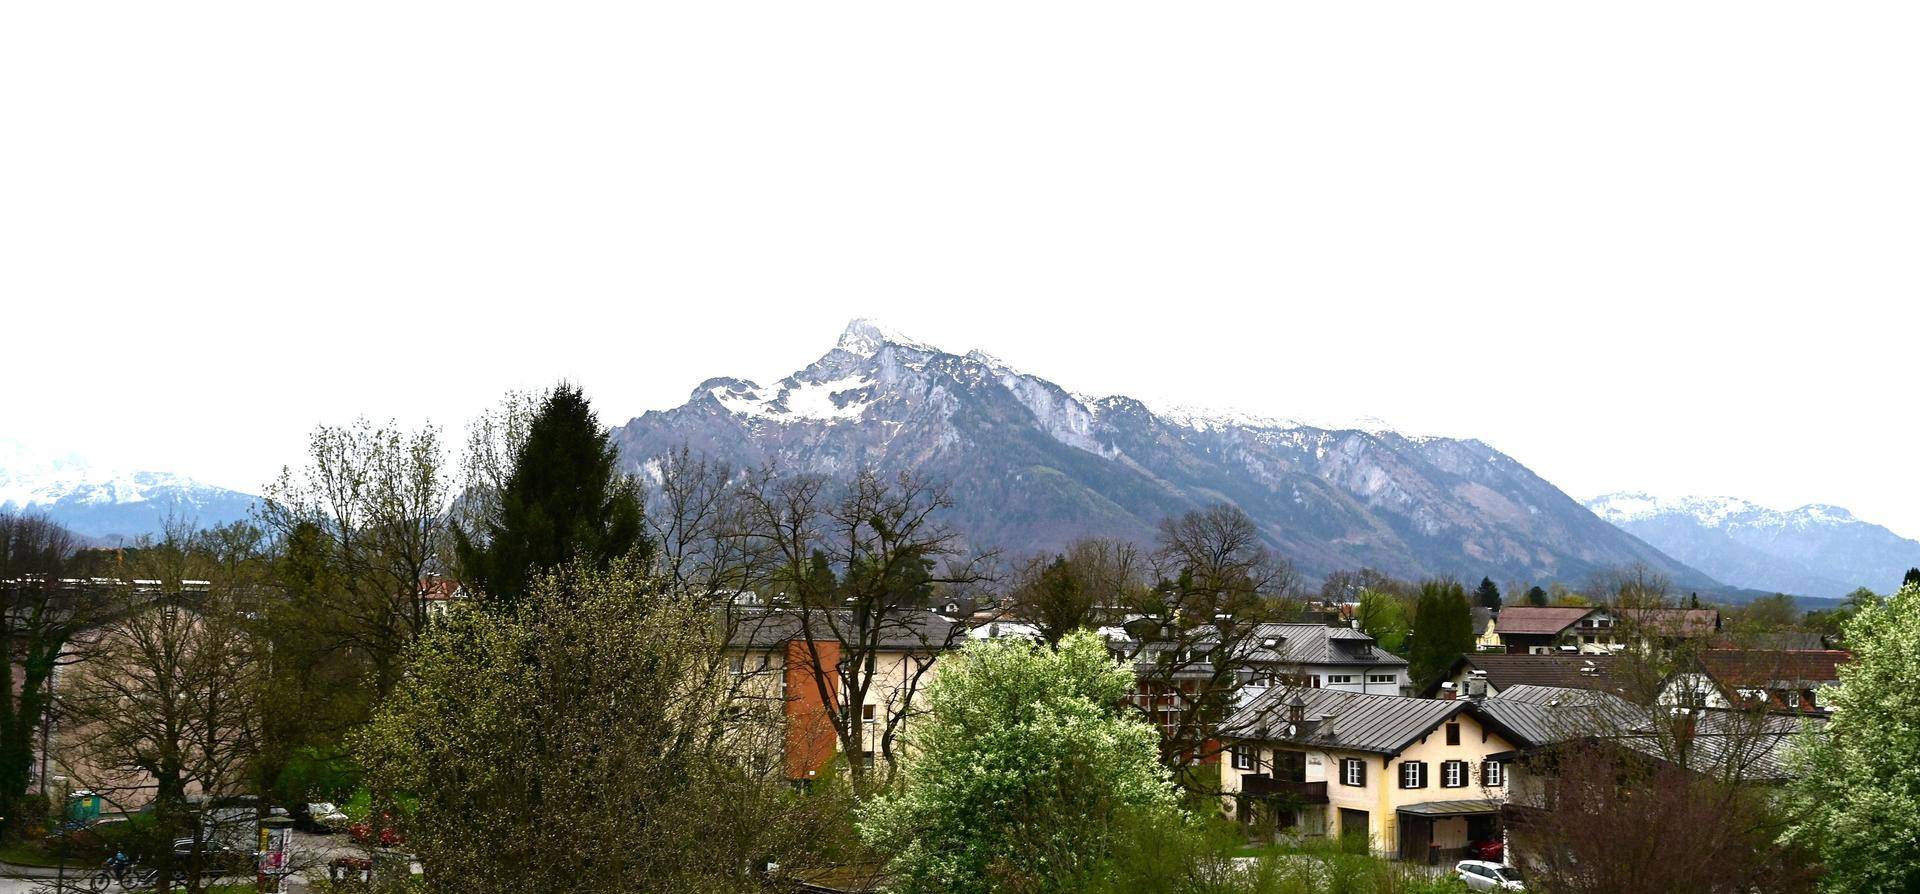 Untersbergblick